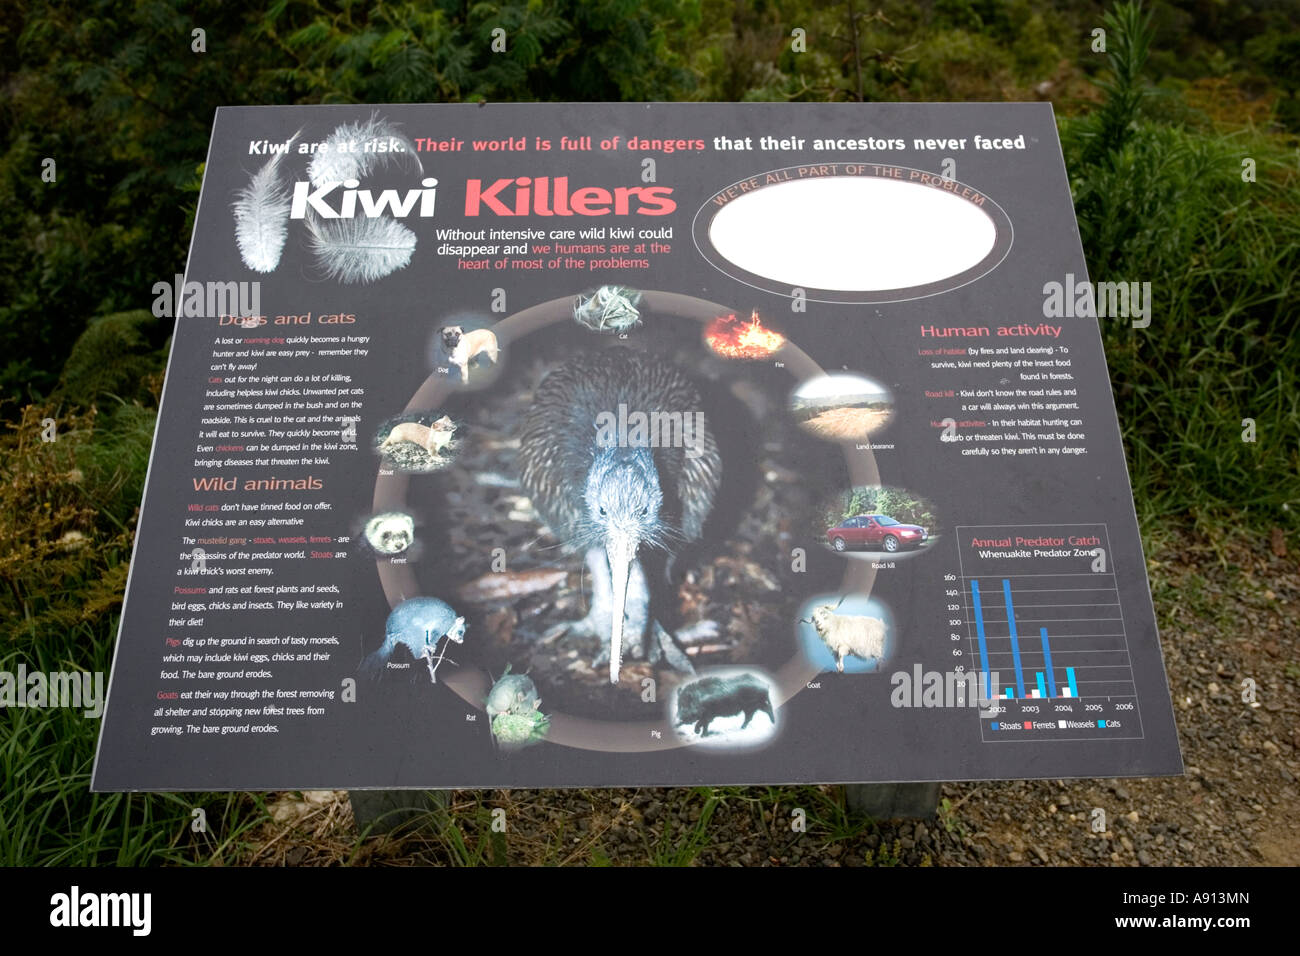 Kiwi Killers information board Coromandel Peninsula North Island New Zealand Stock Photo